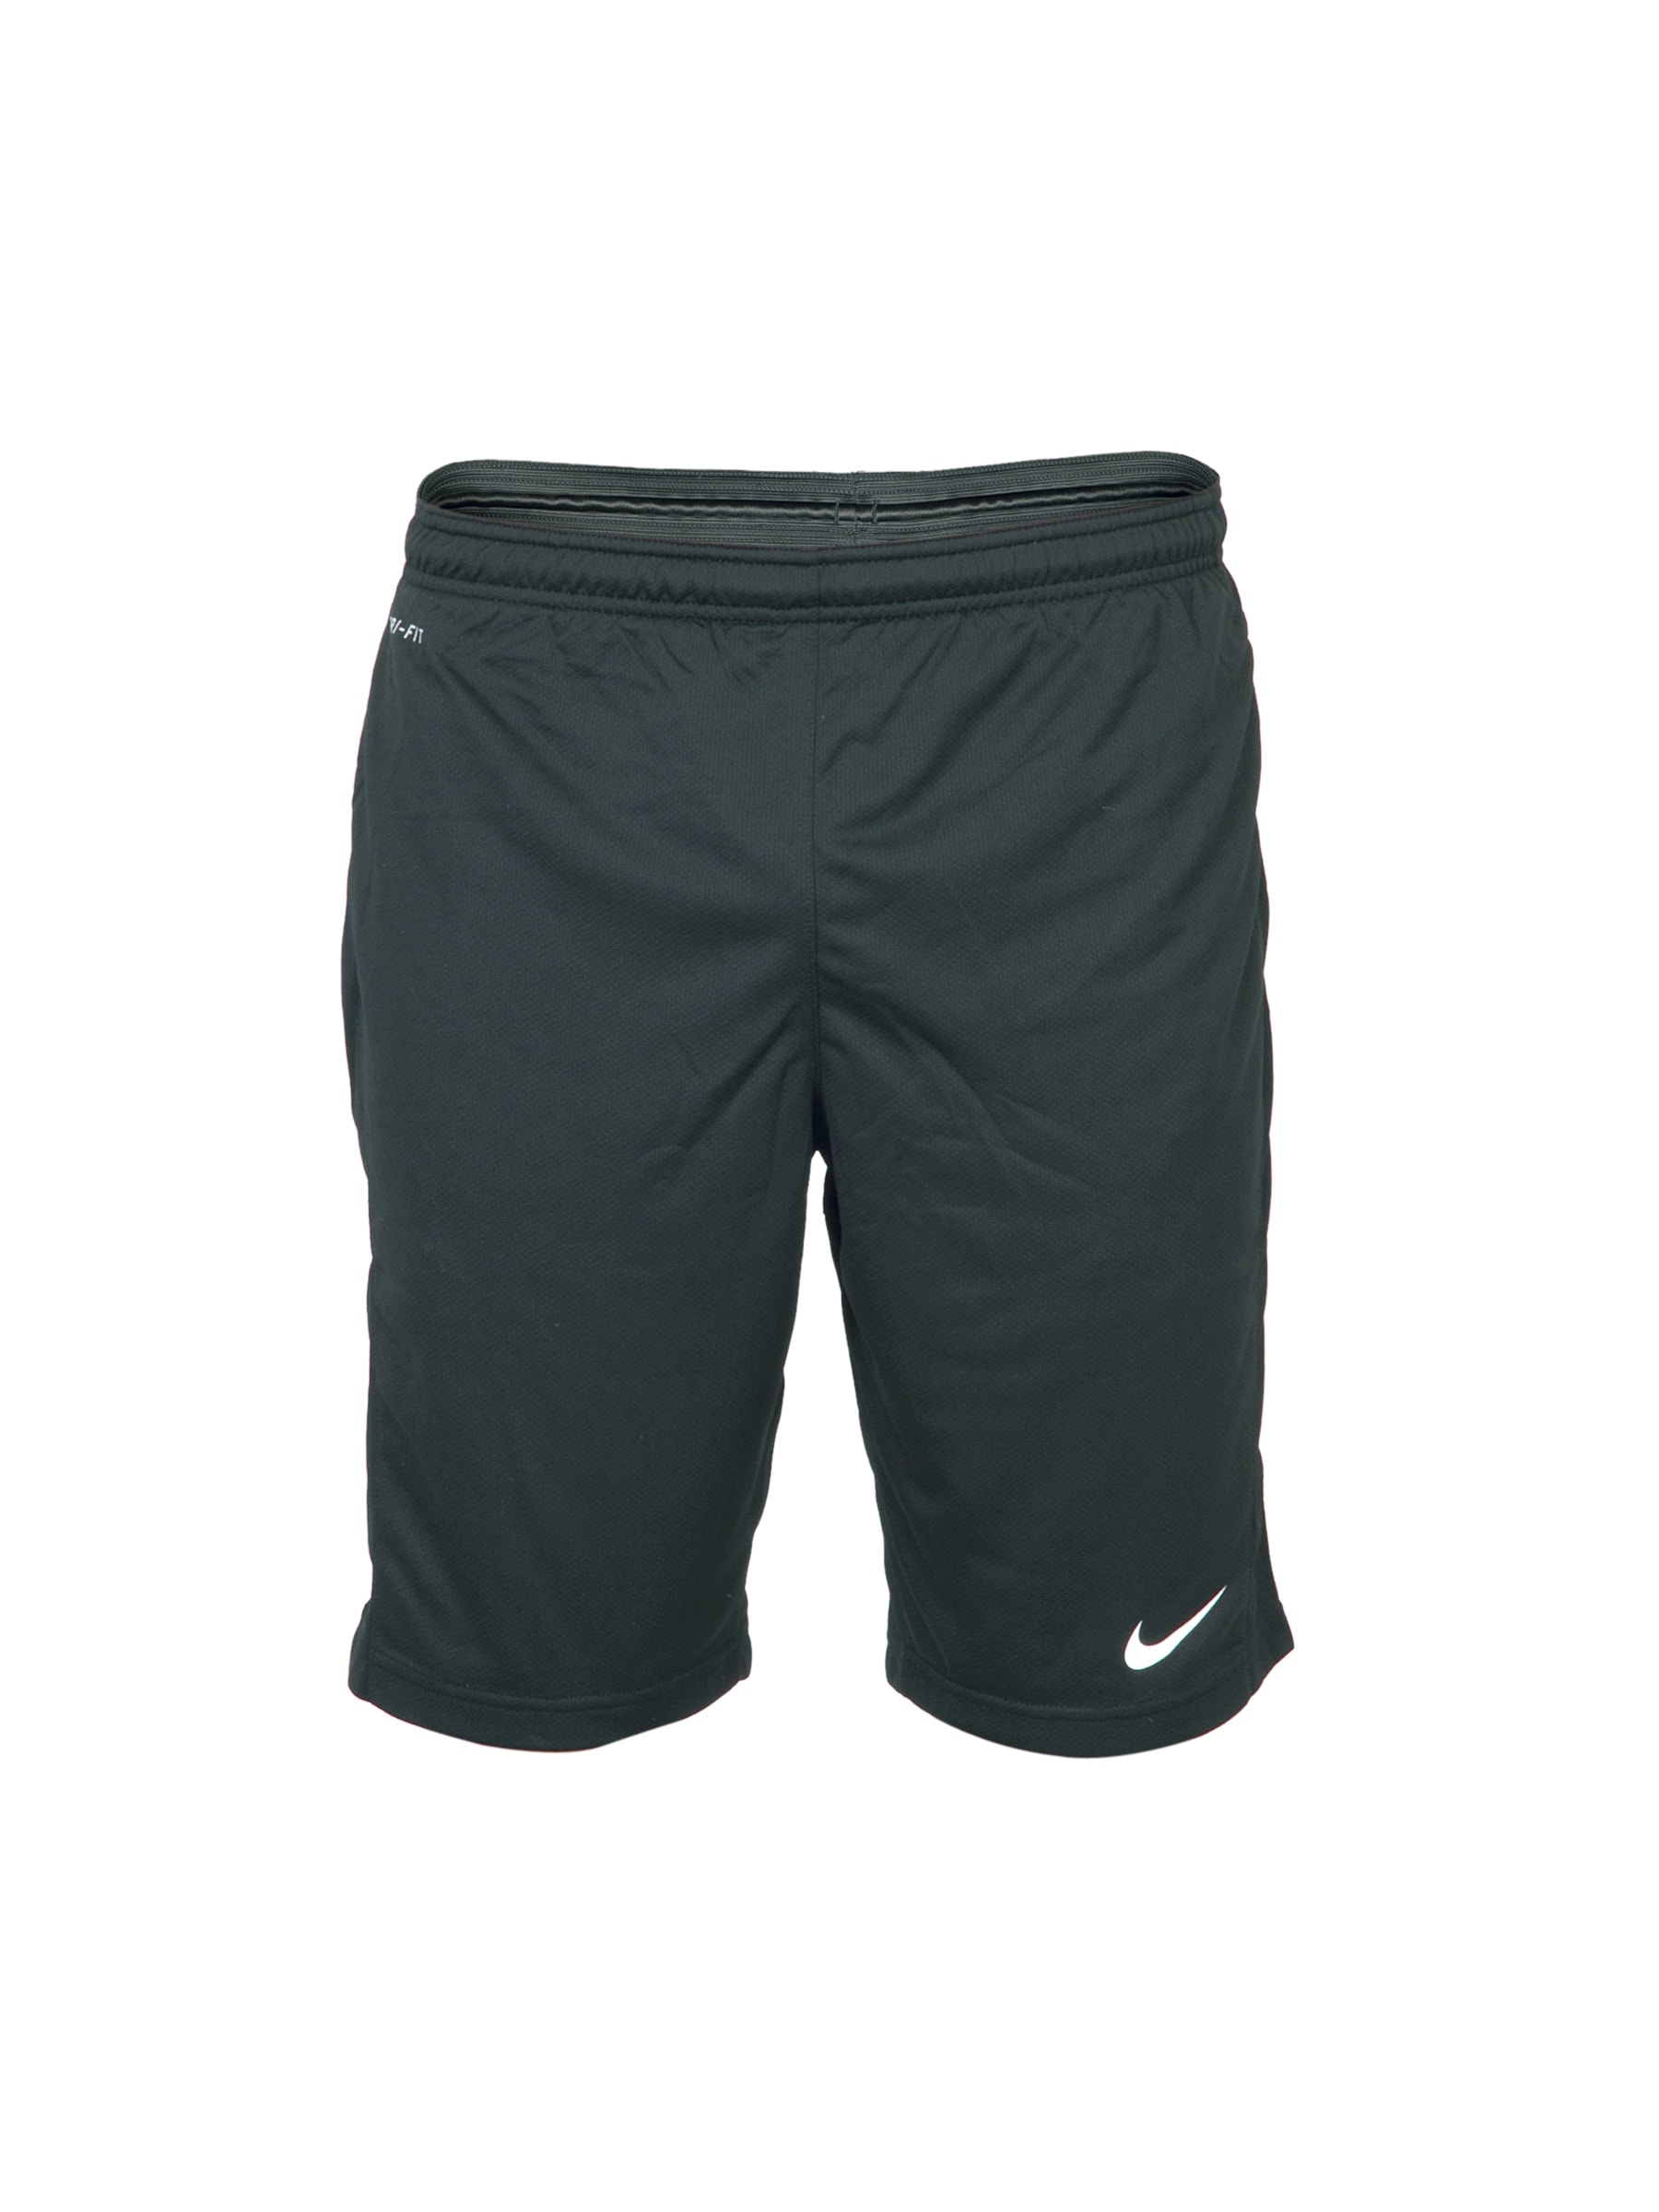 Nike Men Premier Knit Black Shorts